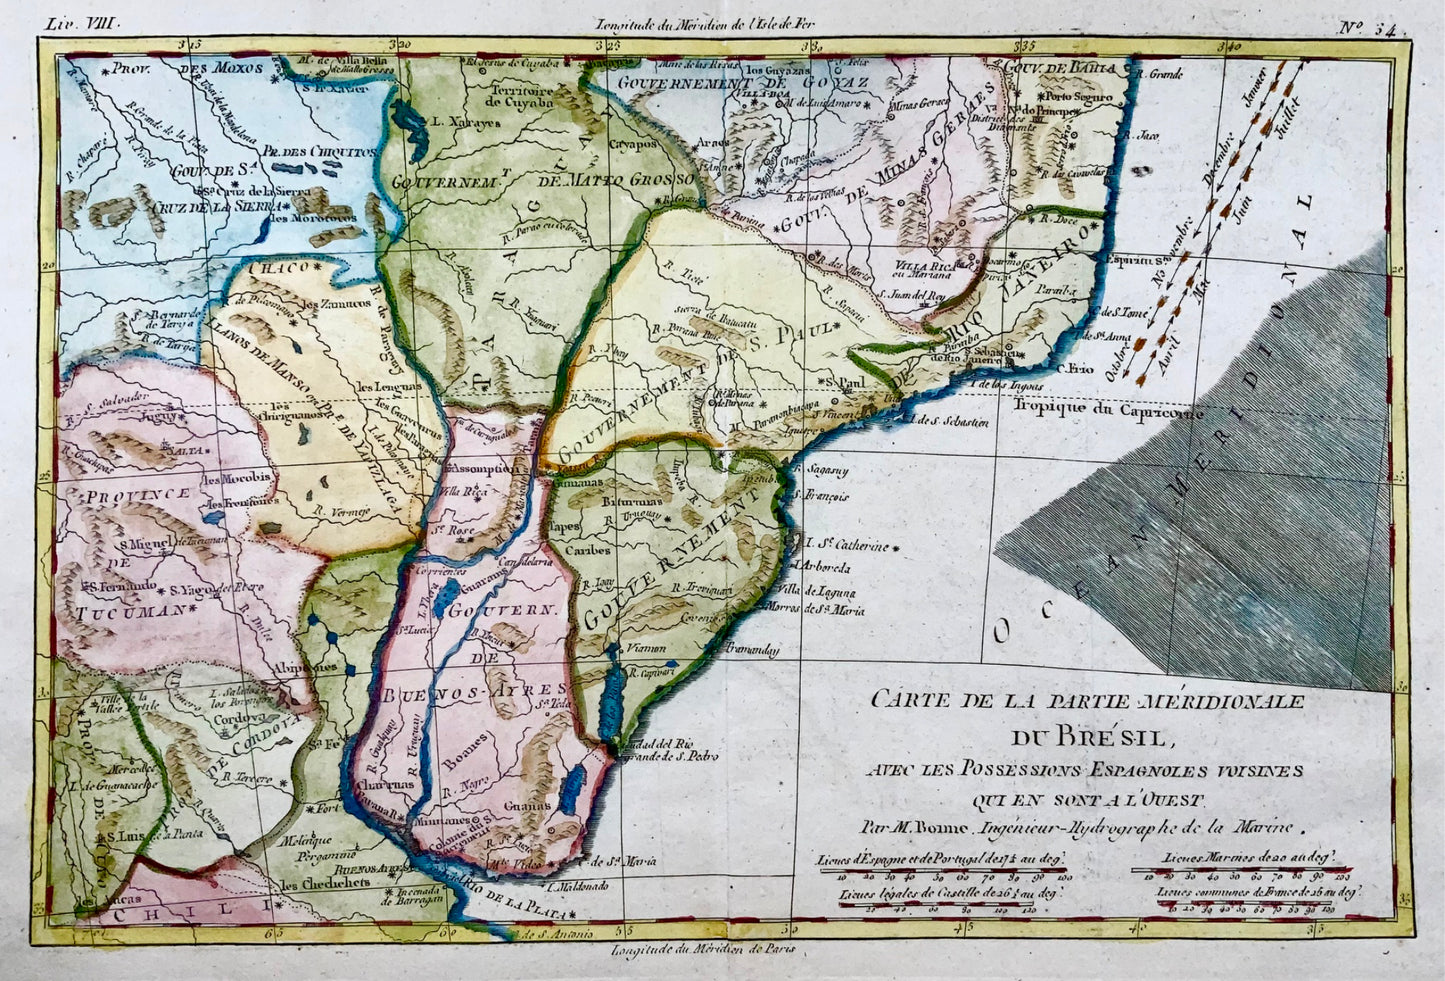 1780 Brasile, Brésil, possedimenti spagnoli, Bonne, mappa incisa a mano